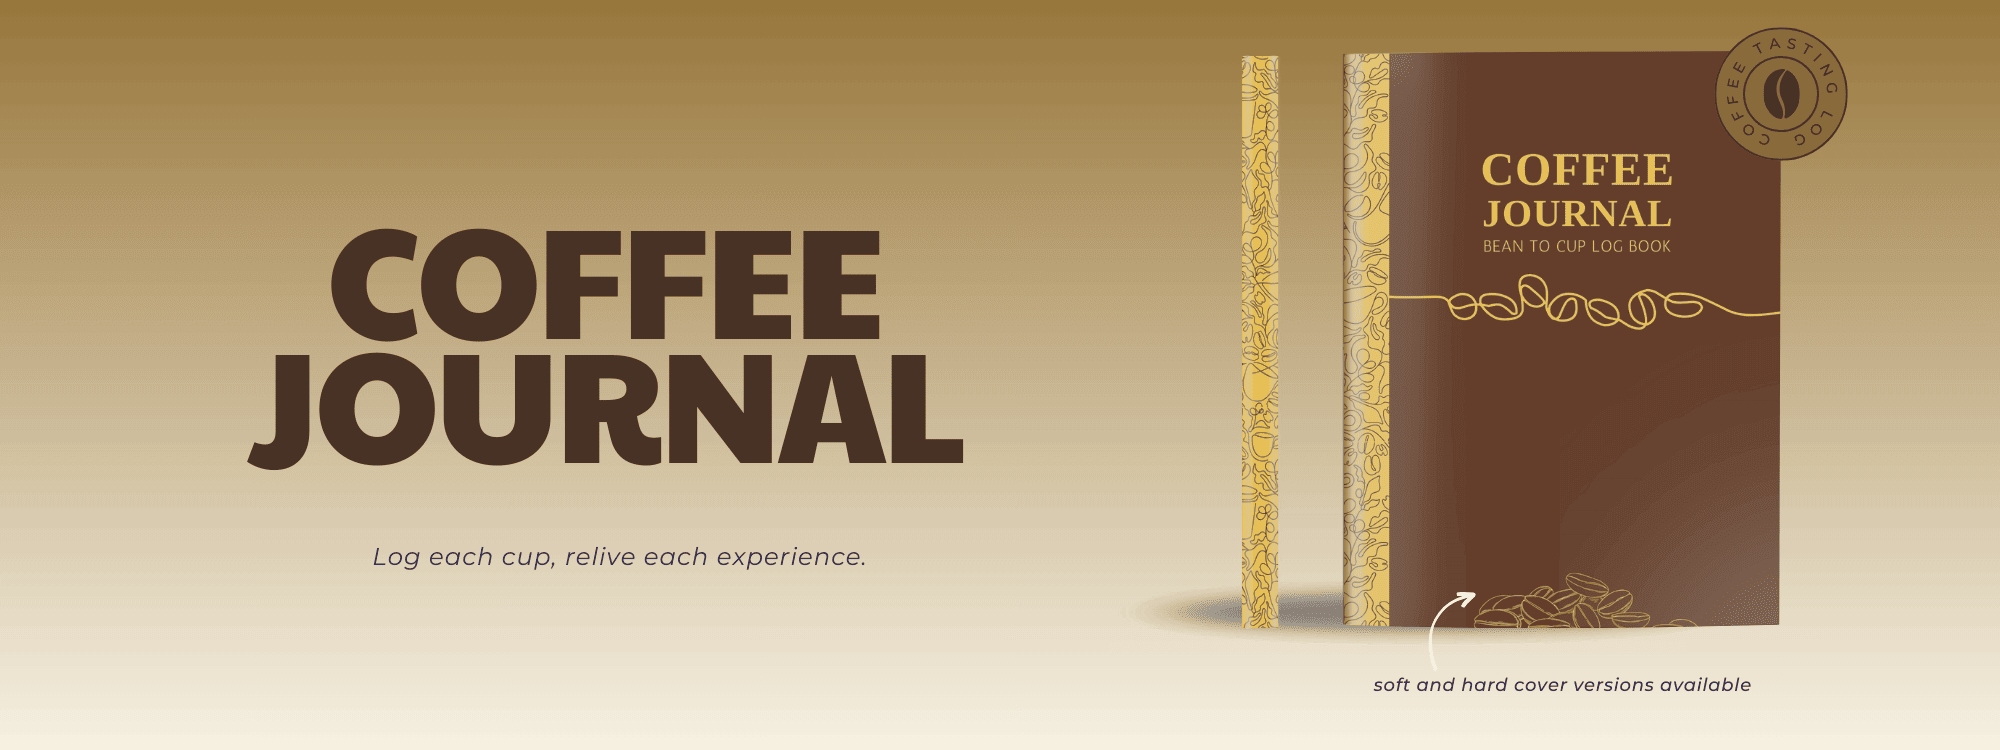 Coffee Journal Banner